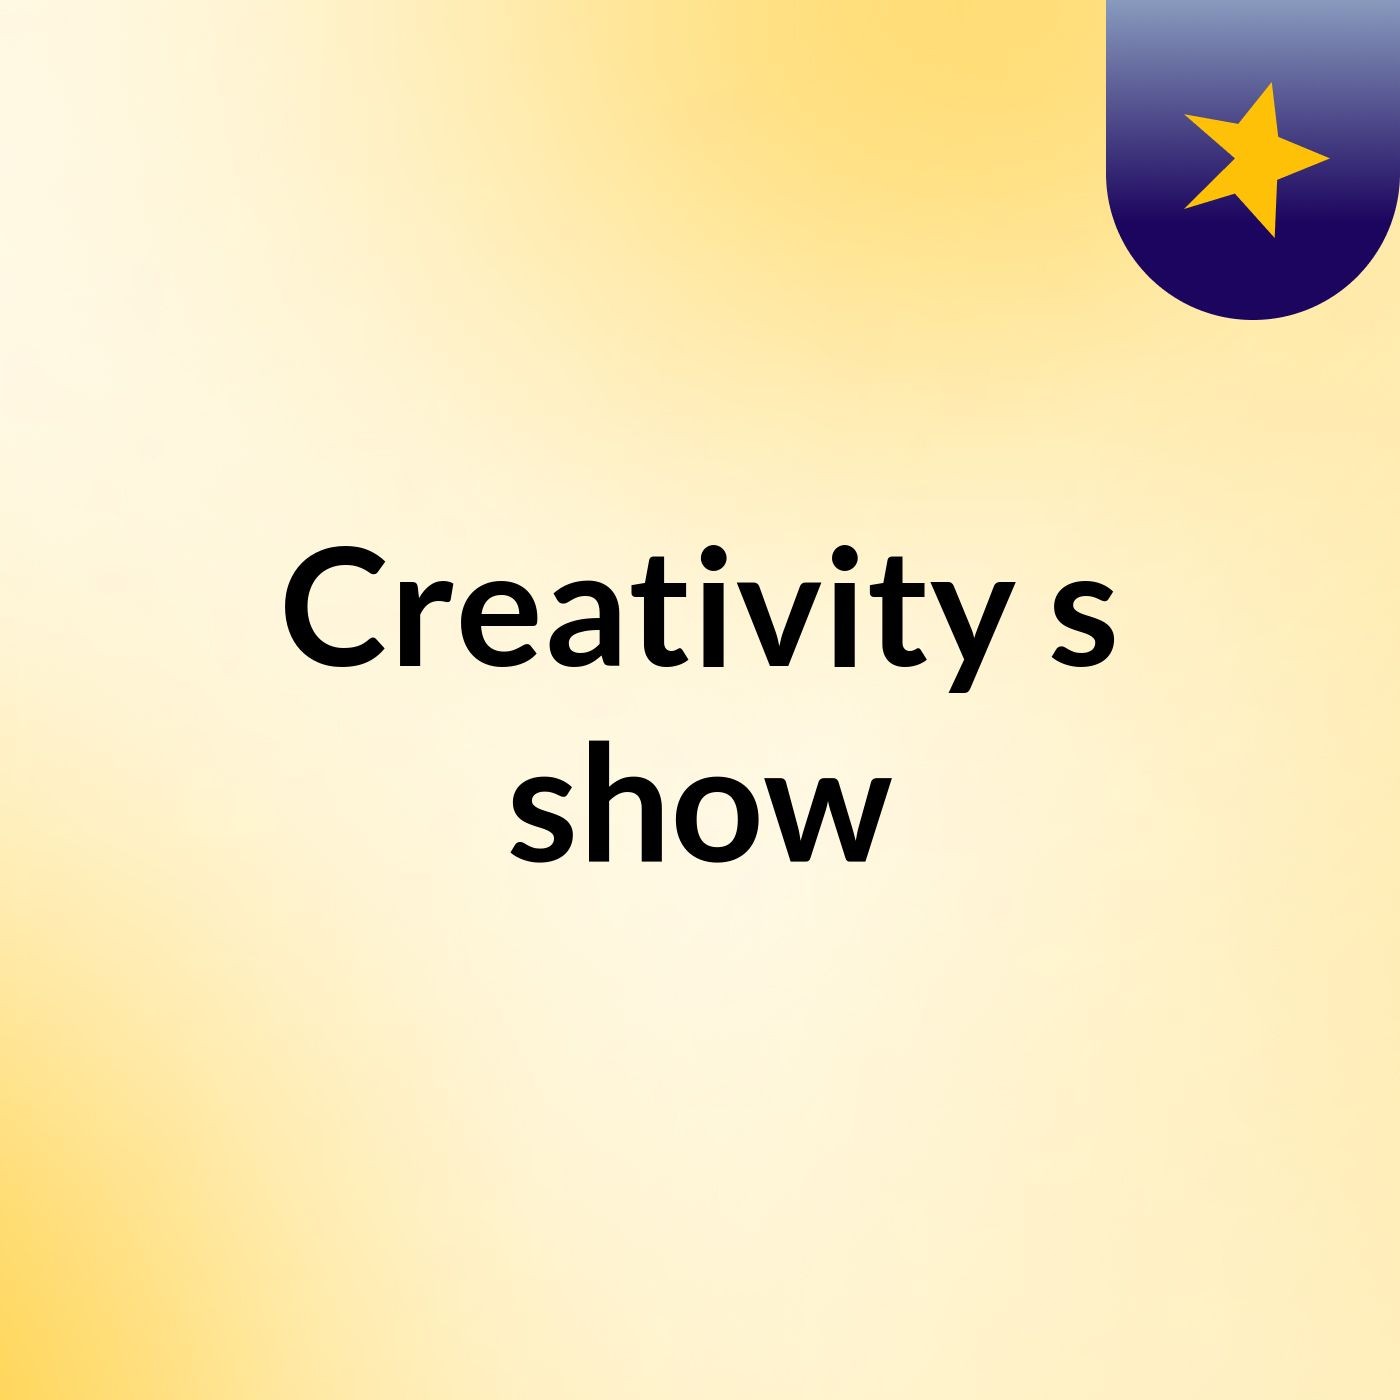 Creativity's show